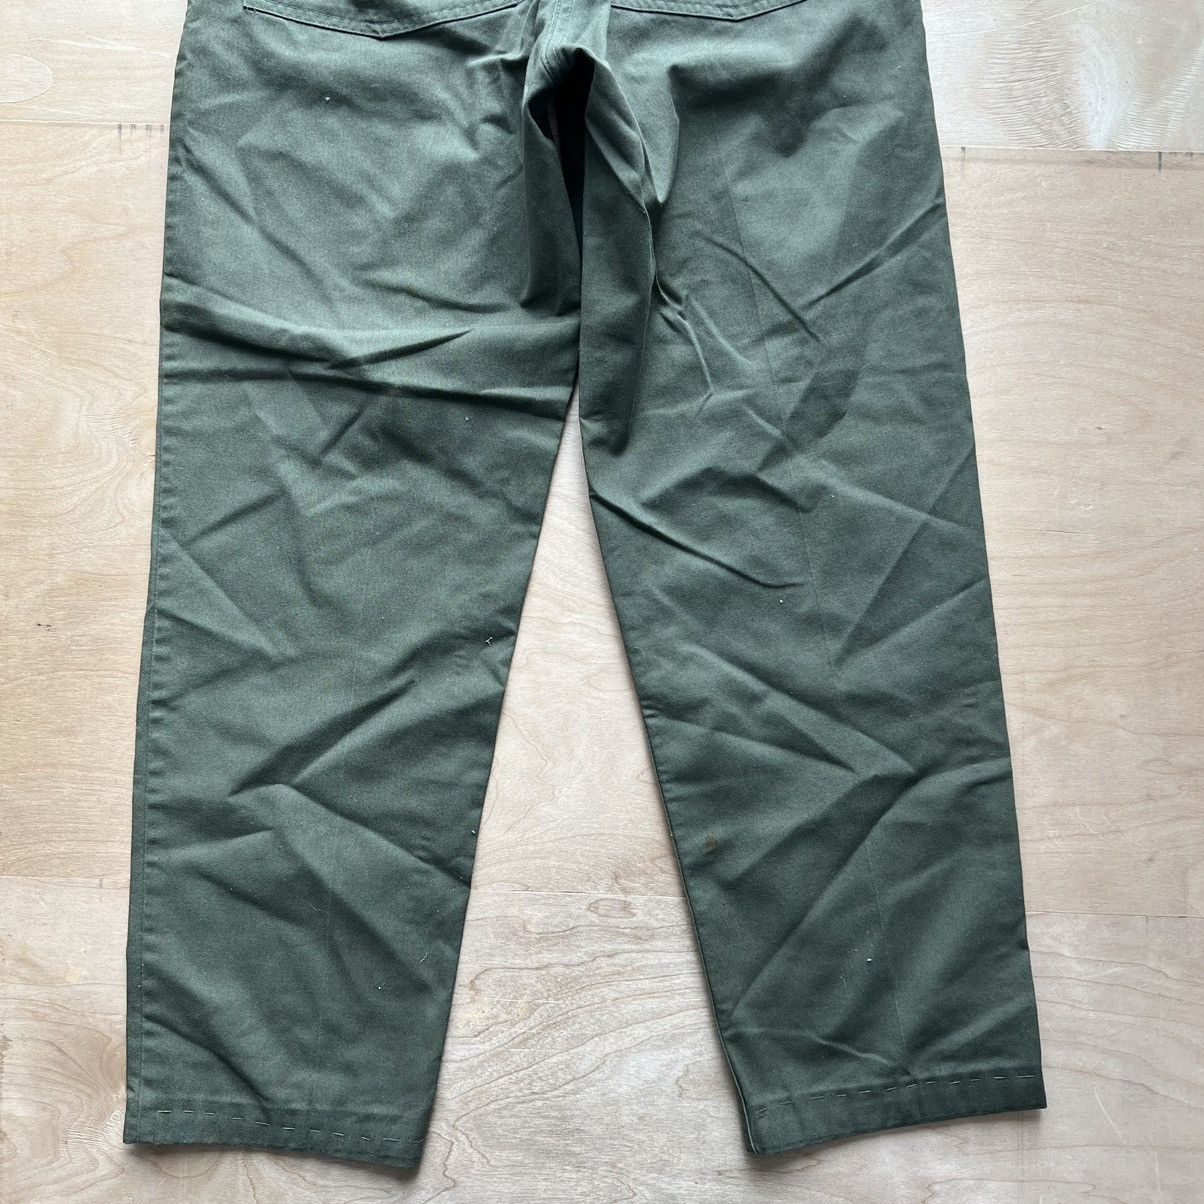 Vintage Vintage Military OG 507 Pants 26x28.5 Green Army Workwear Size US 26 / EU 42 - 9 Thumbnail